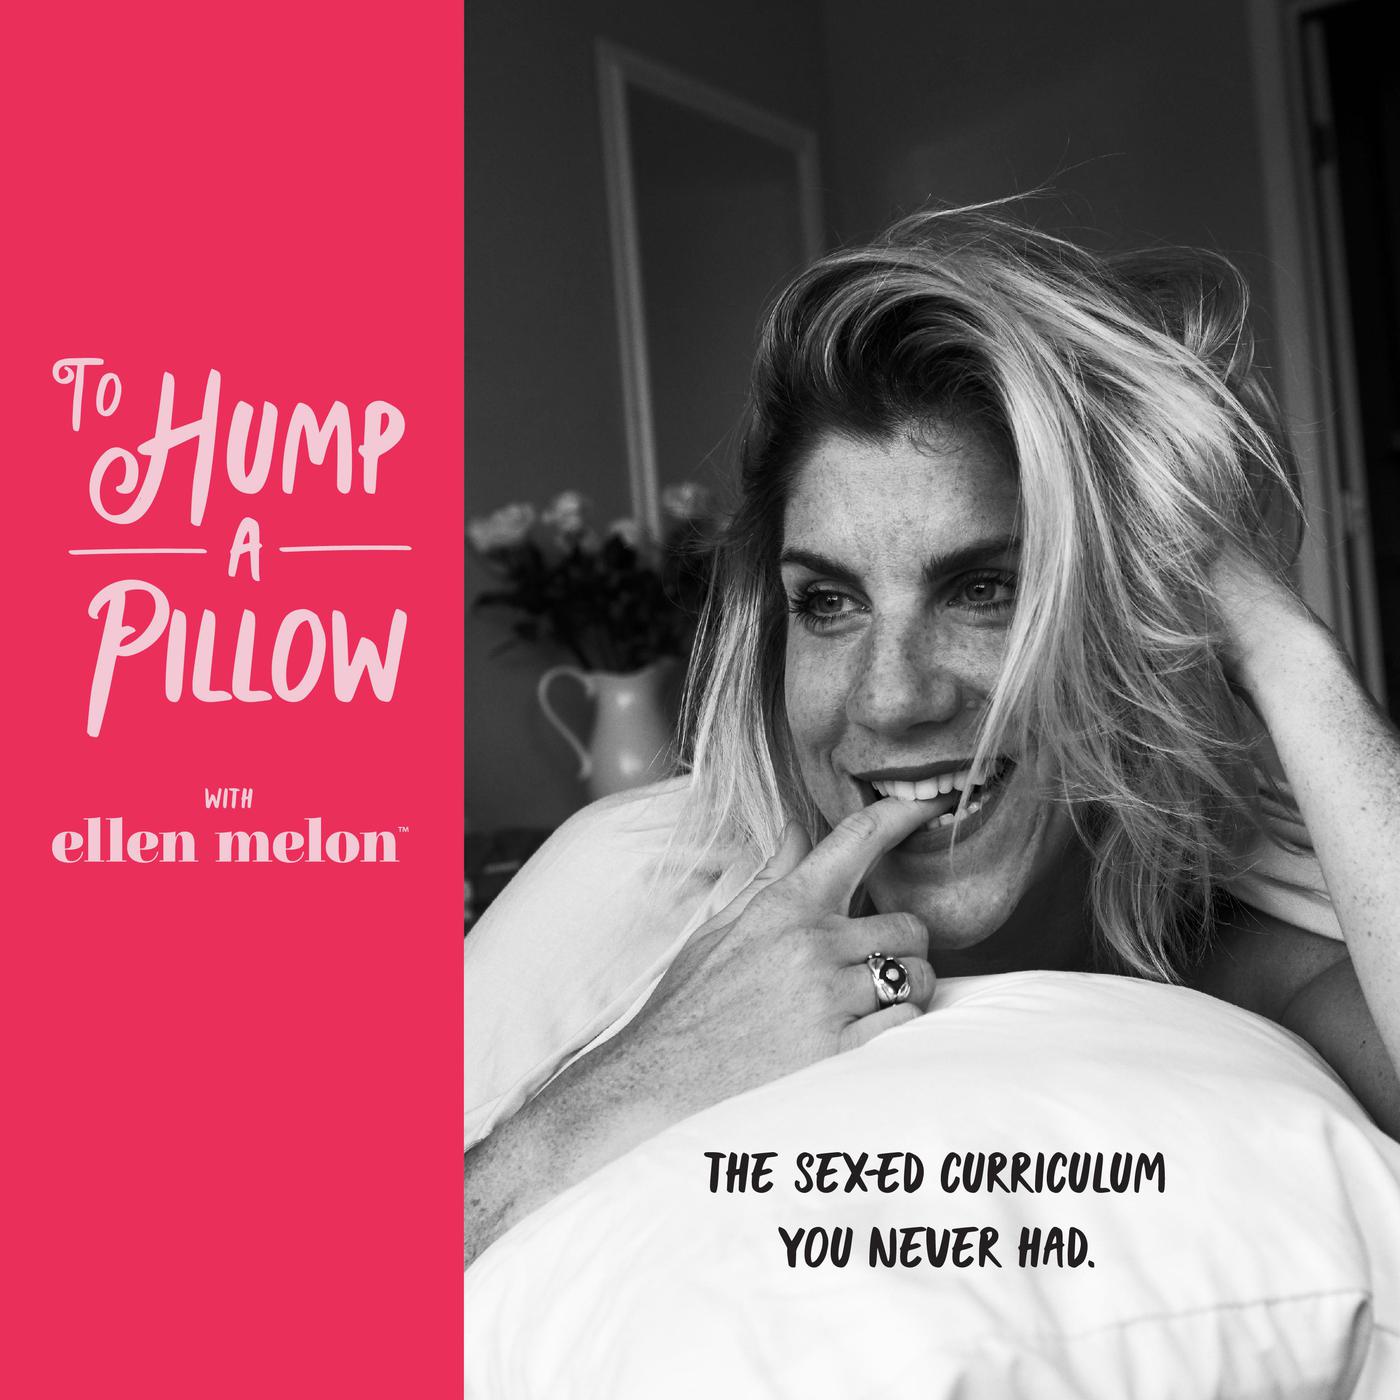 how do i hump a pillow